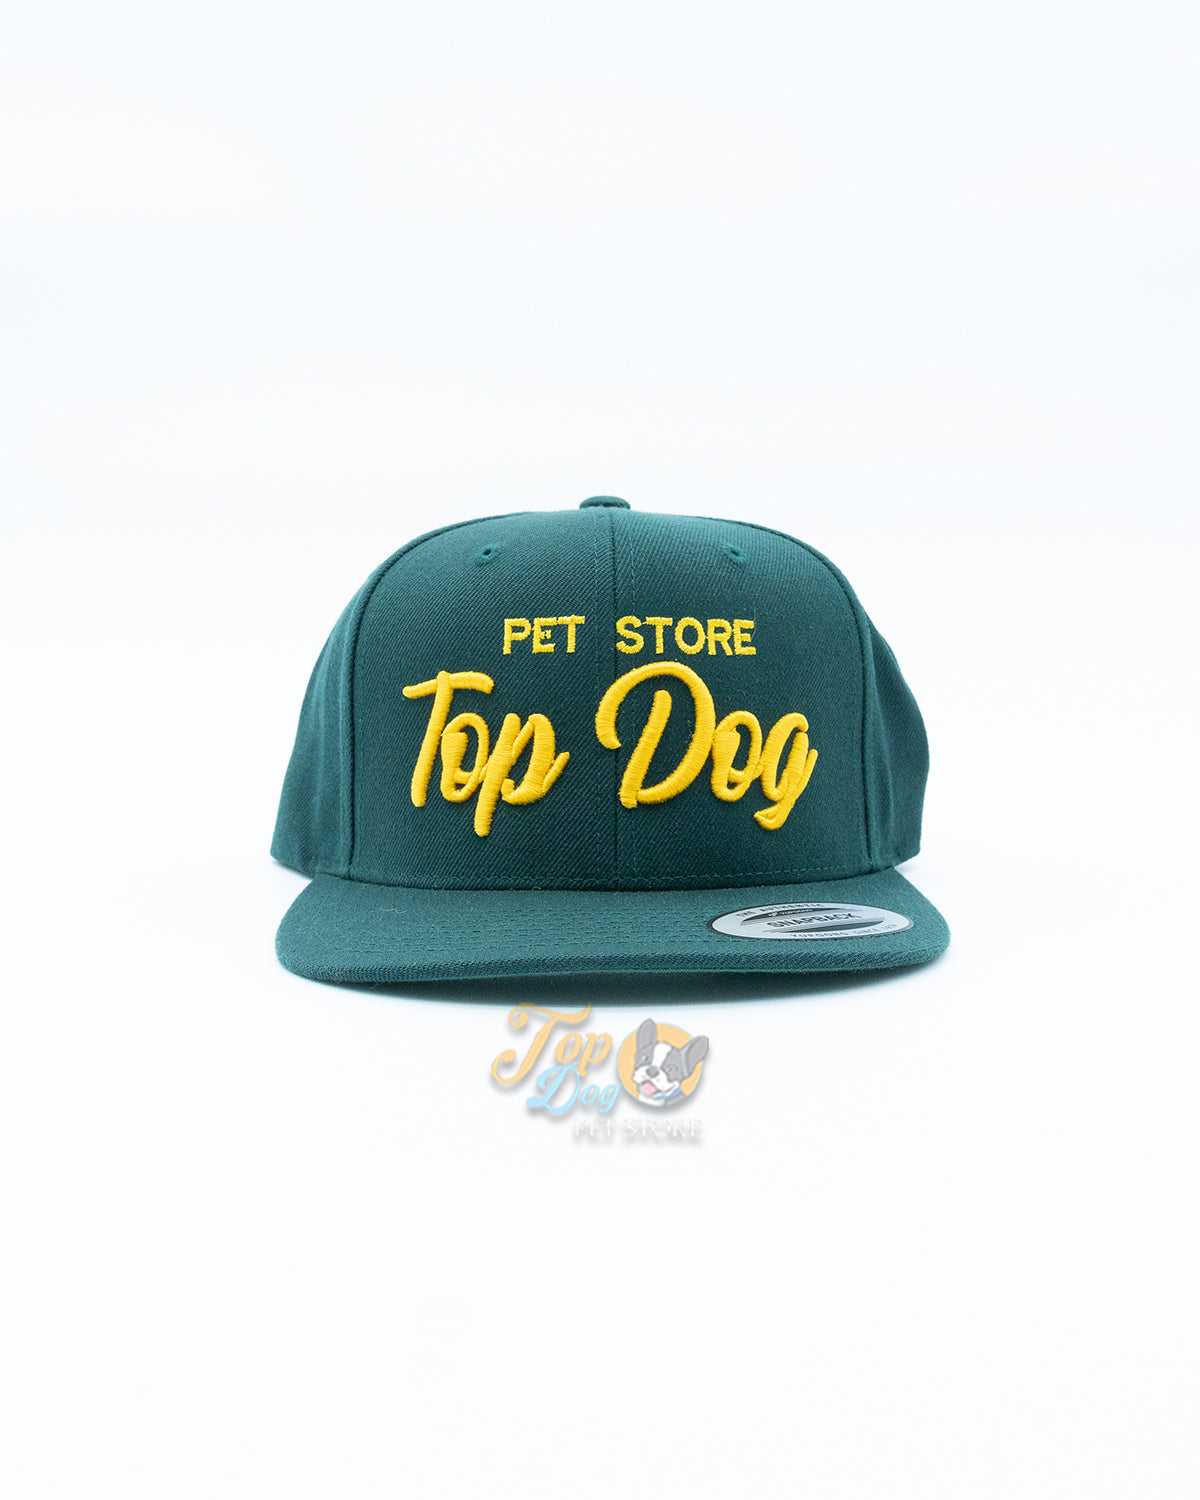 "Top Dog" Snapback